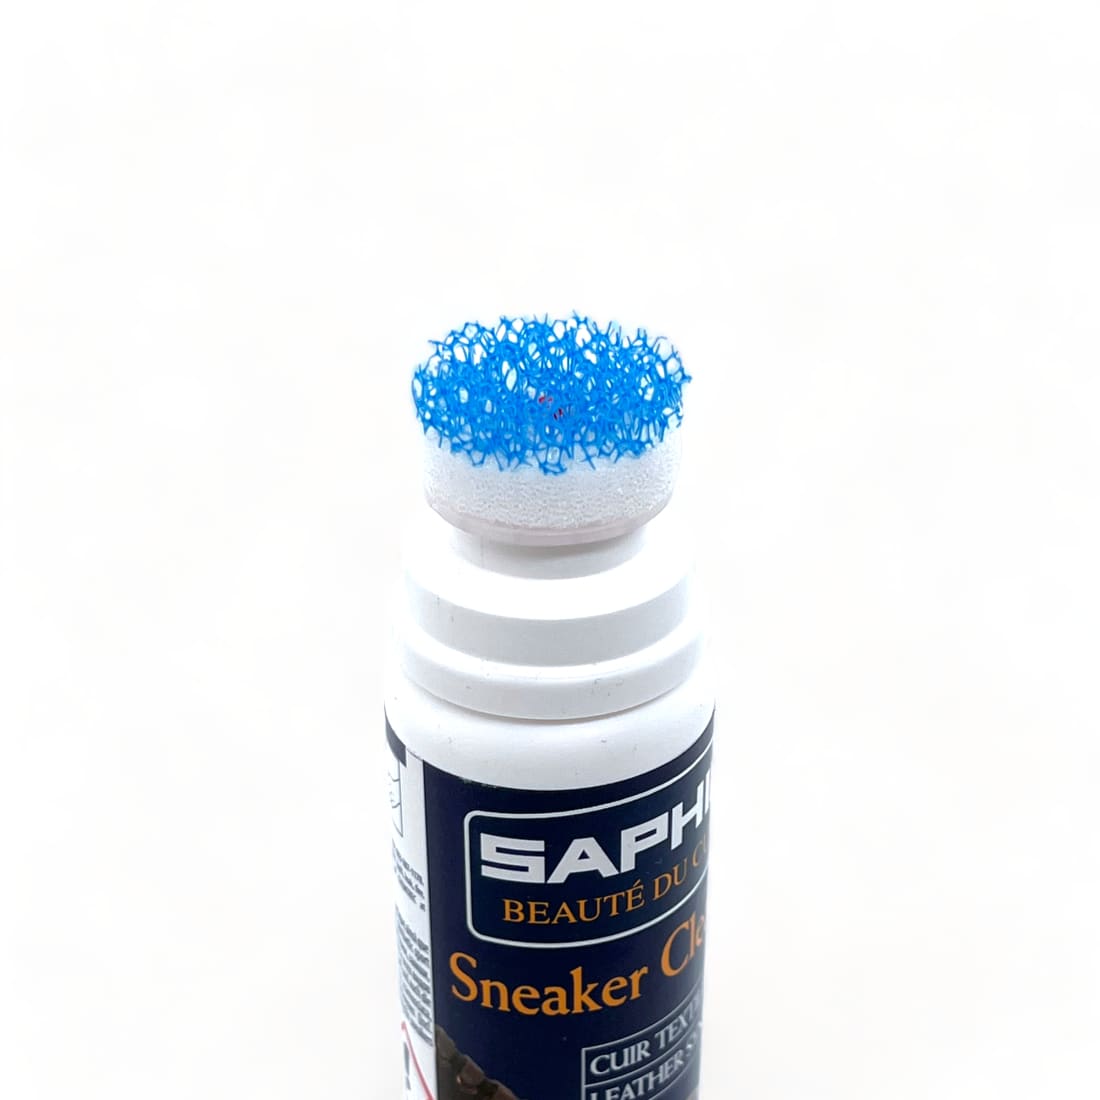 Sneaker Cleaner - Saphir - 75 ml - Accessoires